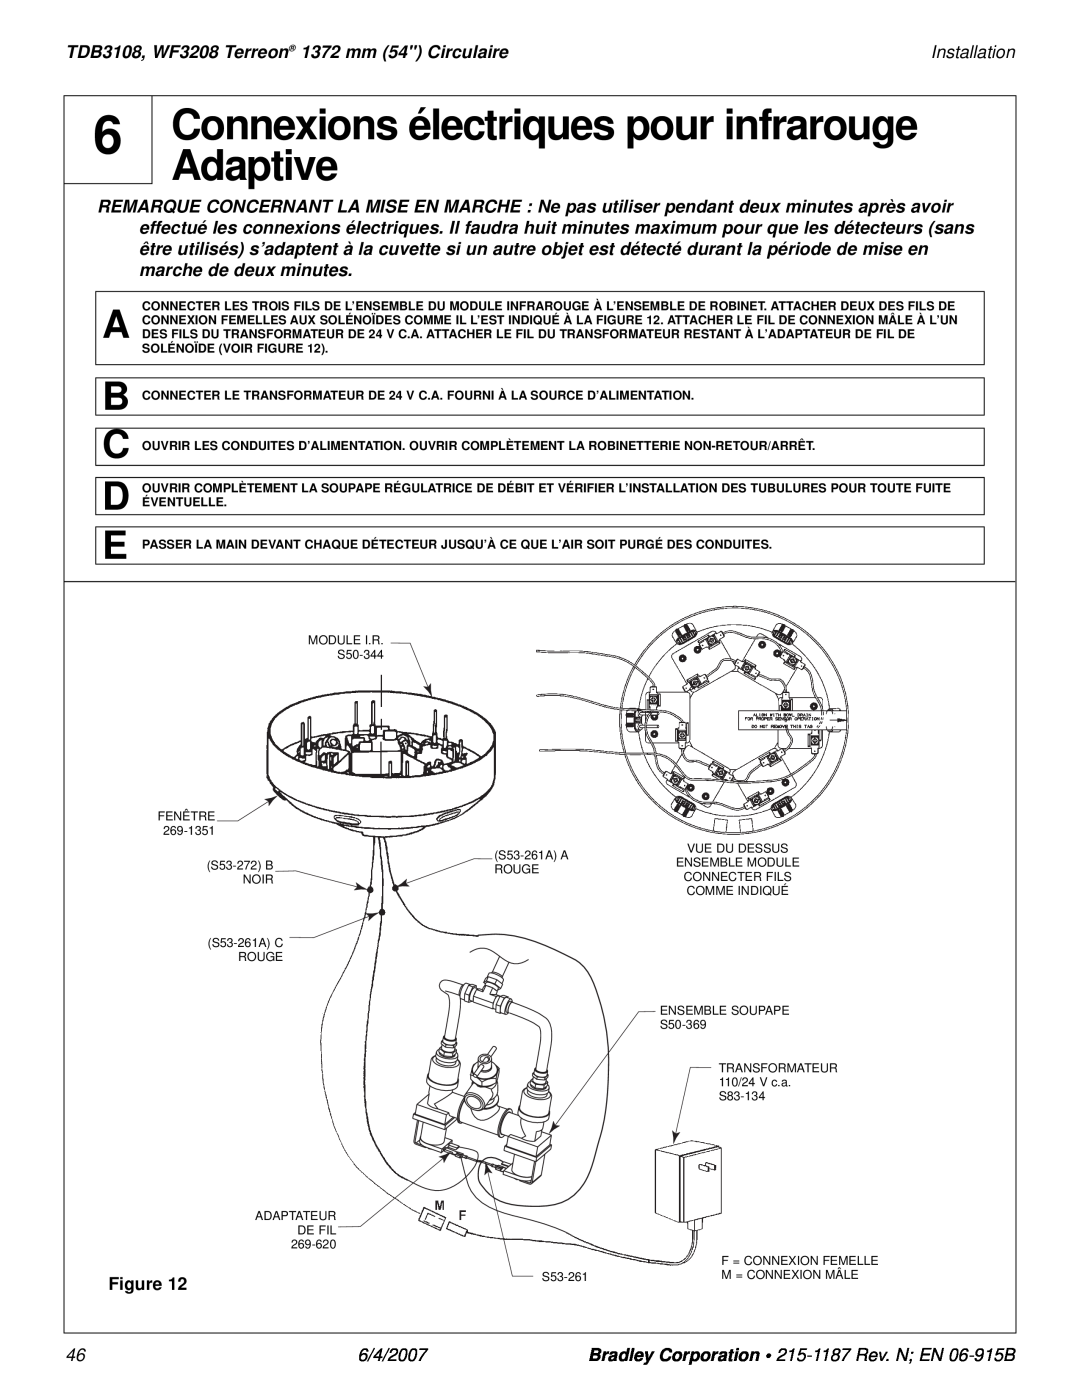 Bradley Smoker Connexions électriques pour infrarouge Adaptive, TDB3108, WF3208 Terreon 1372 mm 54 Circulaire, 6/4/2007 